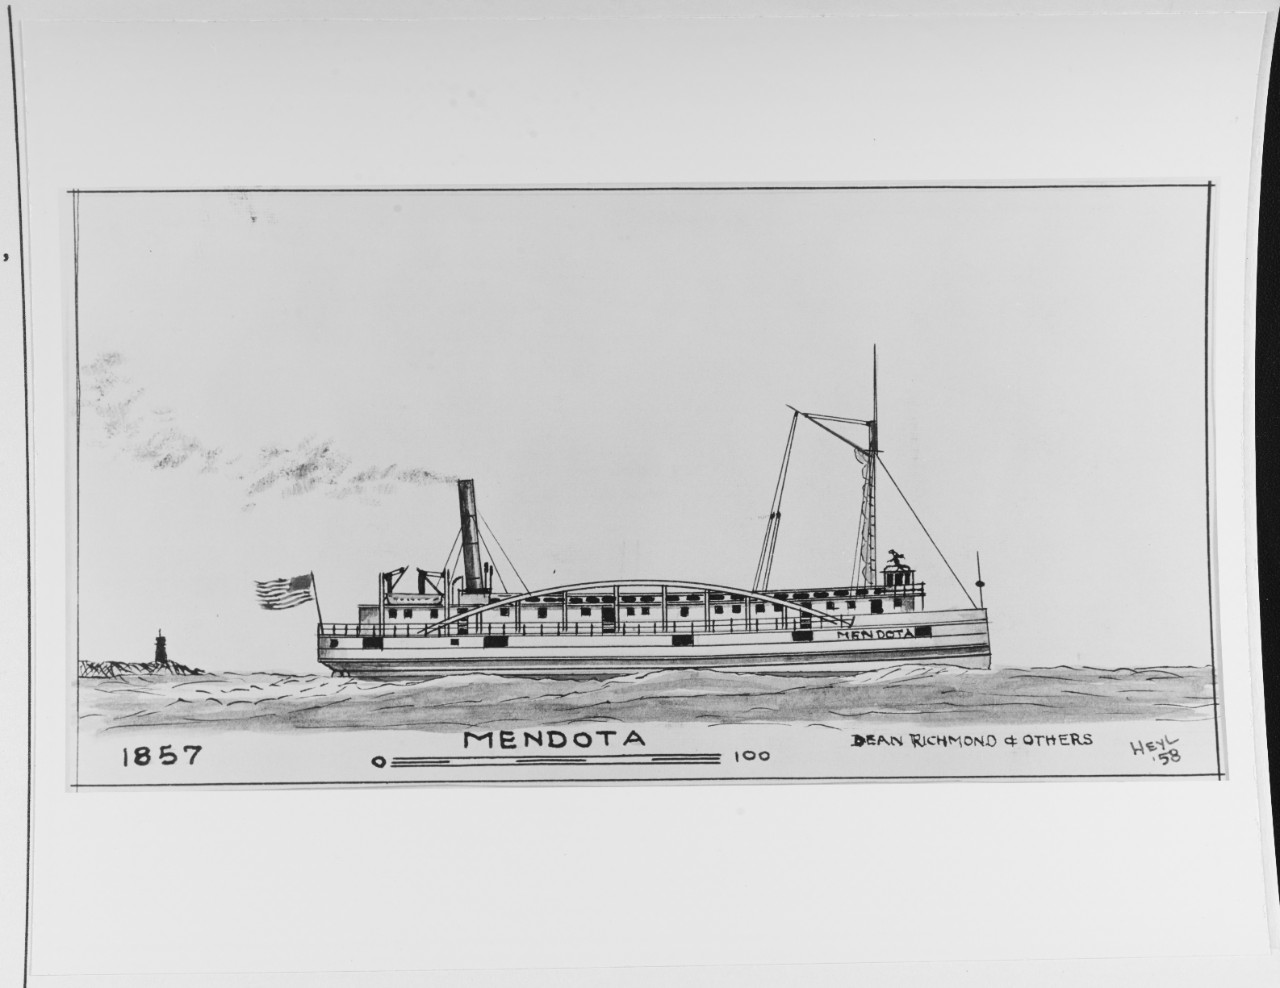 MENDOTA (American merchant steamer, 1857-1875)